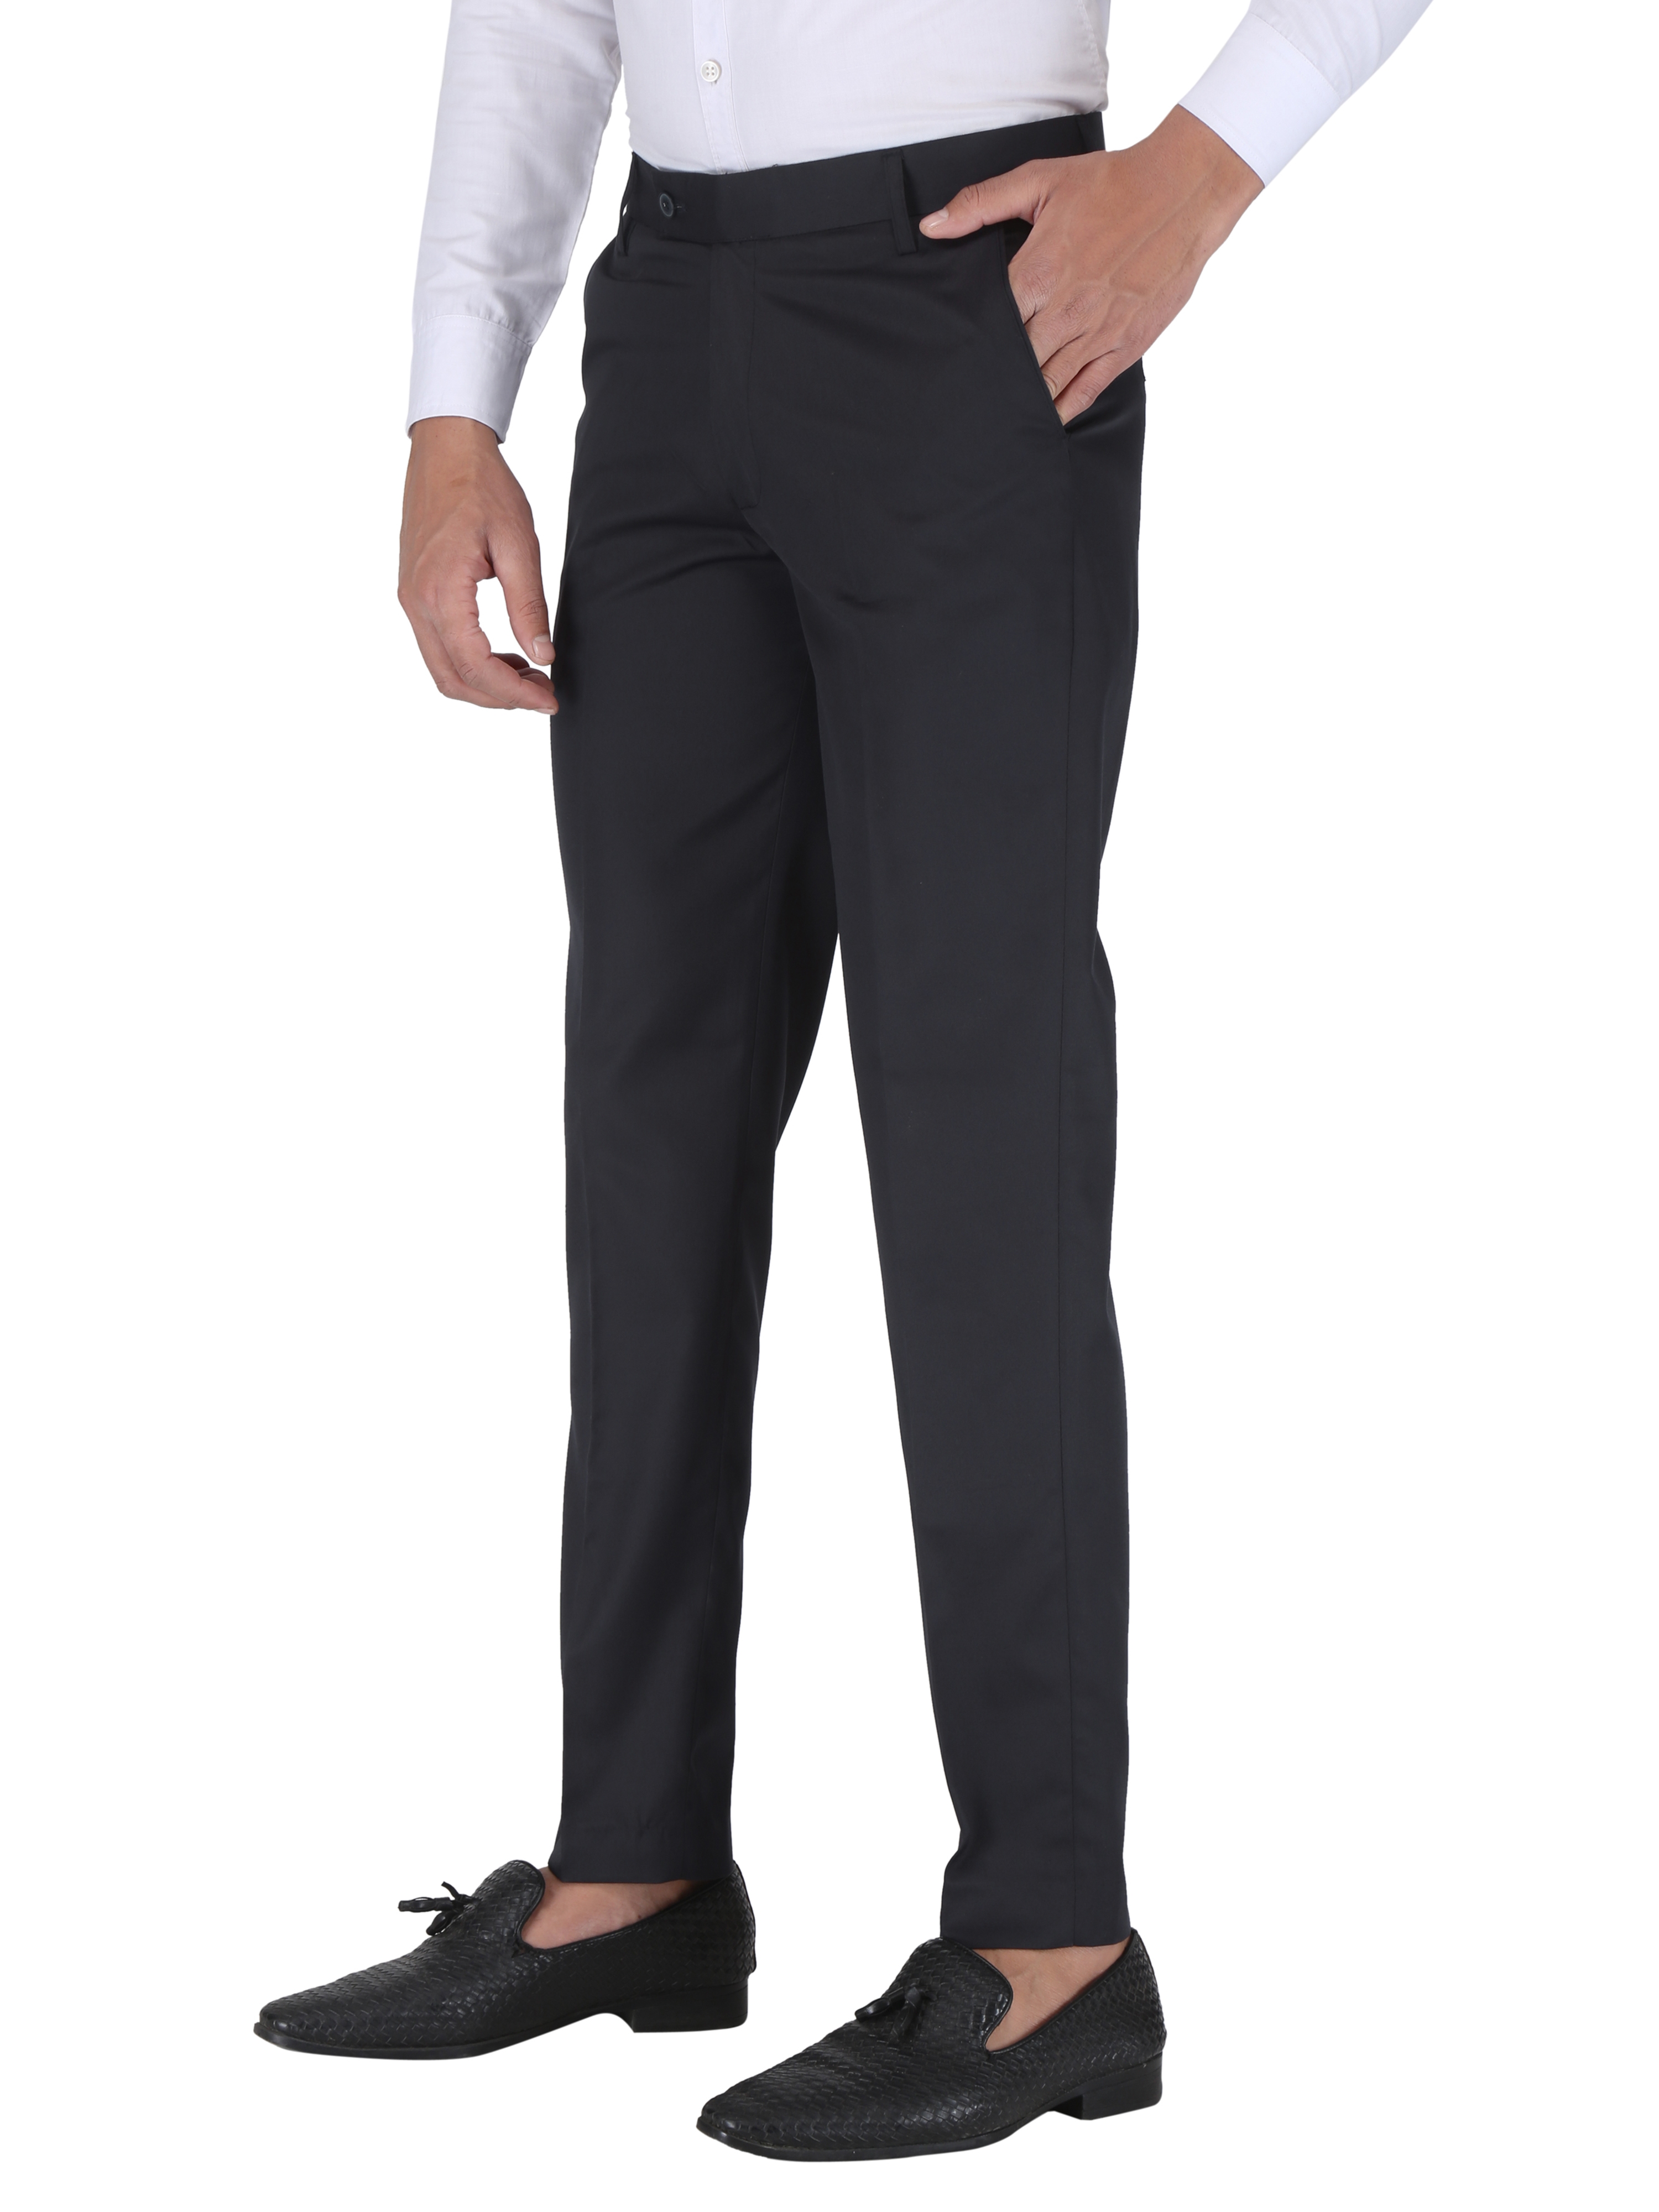 CHARLIE CARLOS | Navy Blue Men's Contemporary Reguler Leg Business Pants in Virgin PolyViscose Regular Fit Formal Trousers/Pants